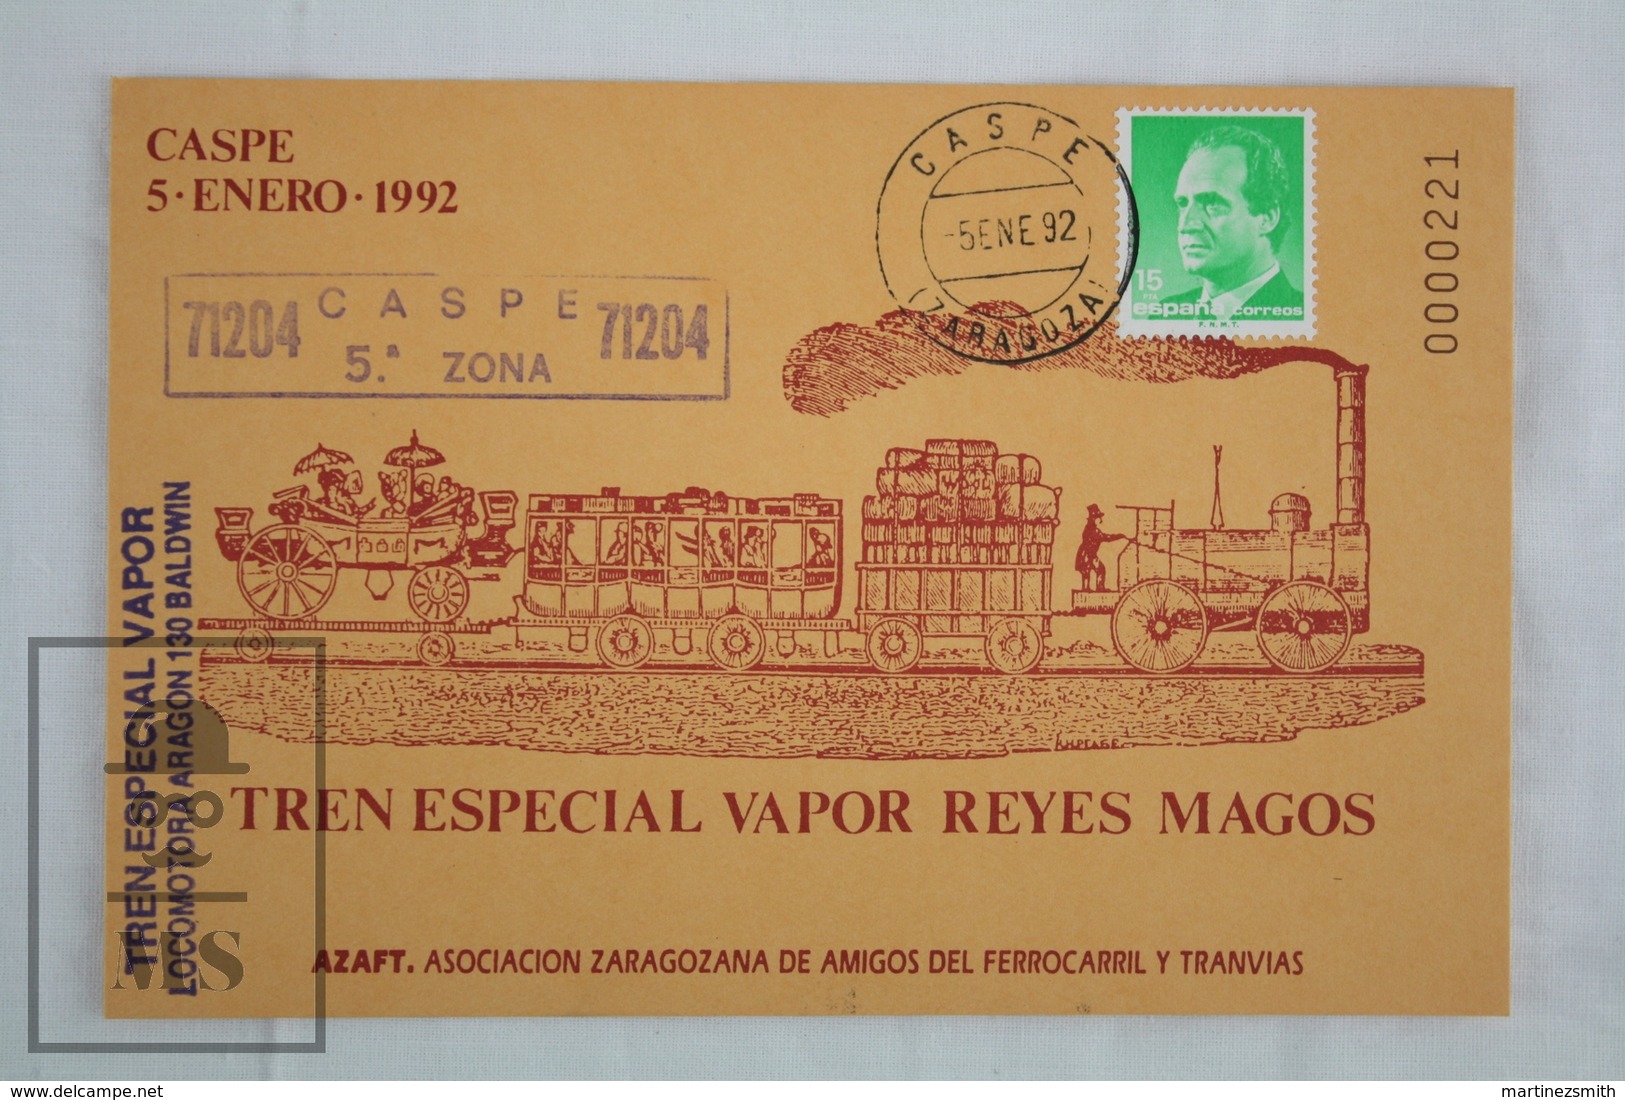 Spanish Railway/ Train Topic Cover - Special Steam Train - Aragon 130 Baldwin Locomotive - Posted 1992 Caspe - Treni